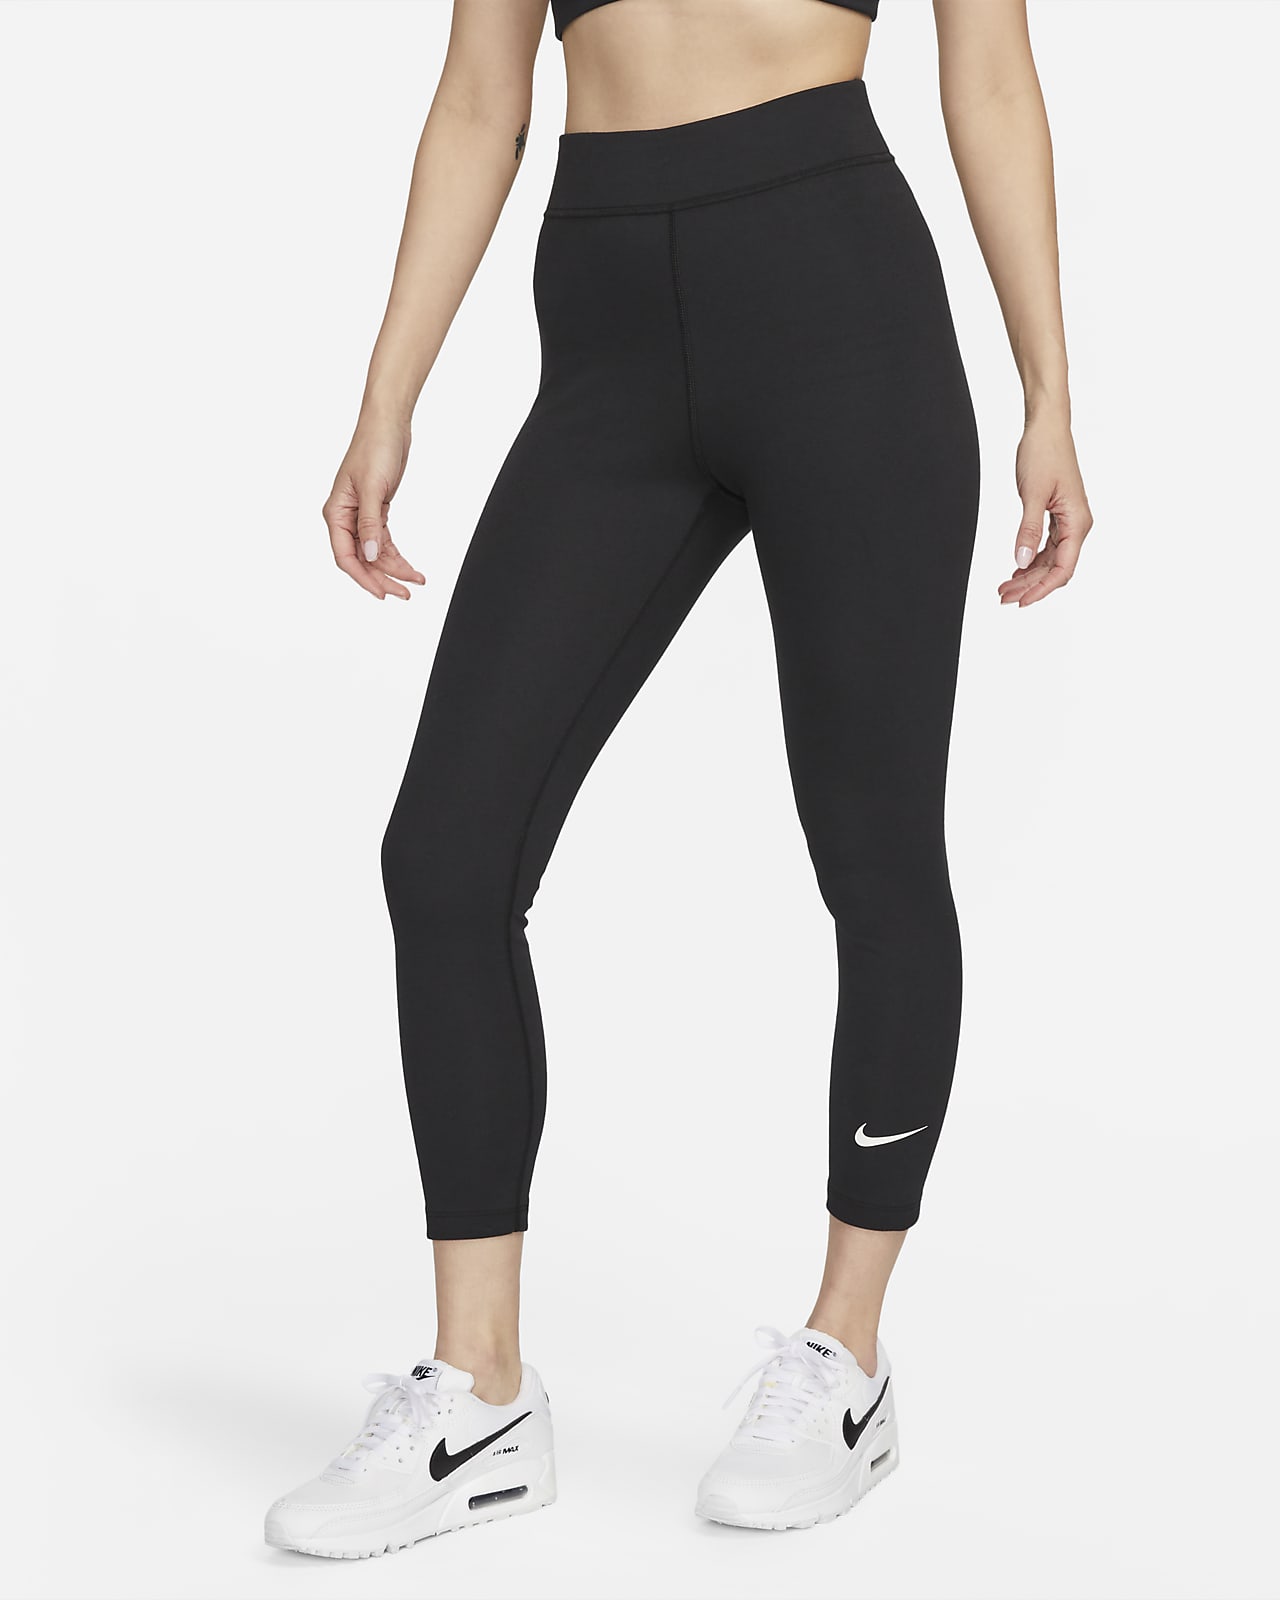 Nike Women's Legend 2.0 Tight Dri Fit Cotton Capri - Dark Grey  Heather/Anthracite/Black, X-Large : Amazon.co.uk: Sports & Outdoors